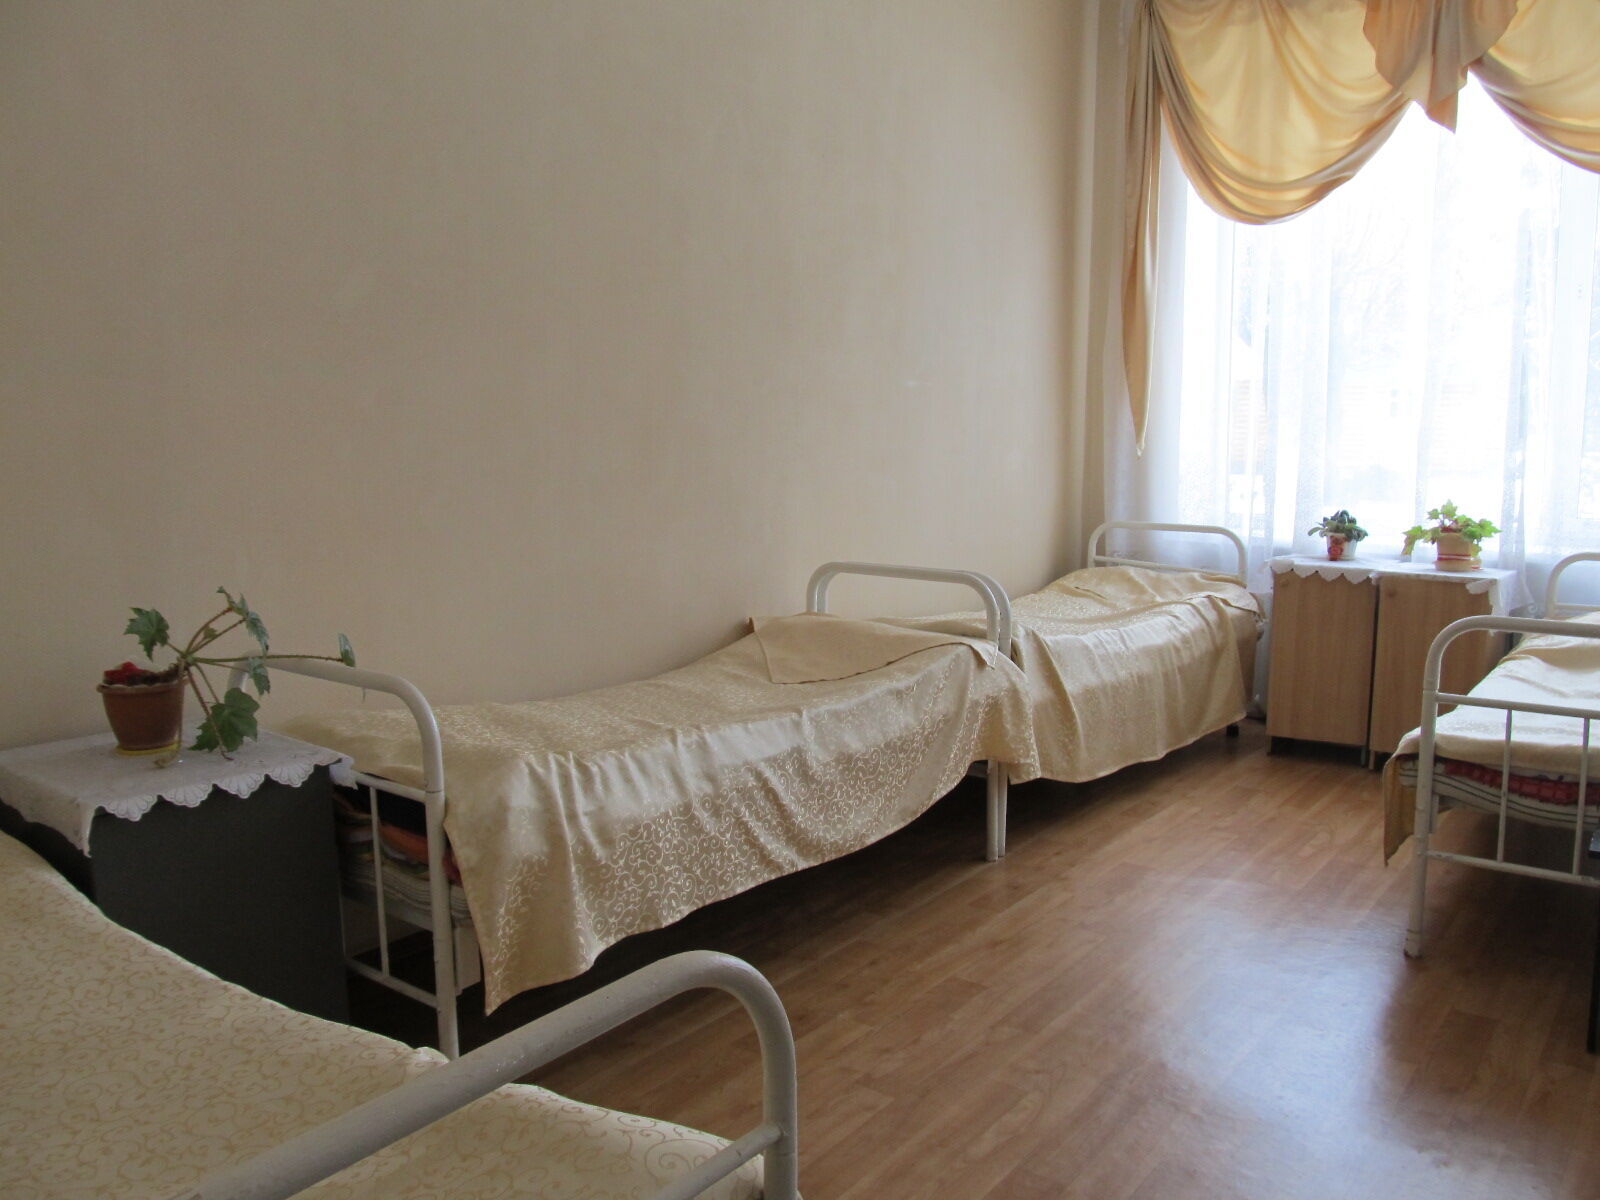 Кімната, де мешкає Олена Зайцева.